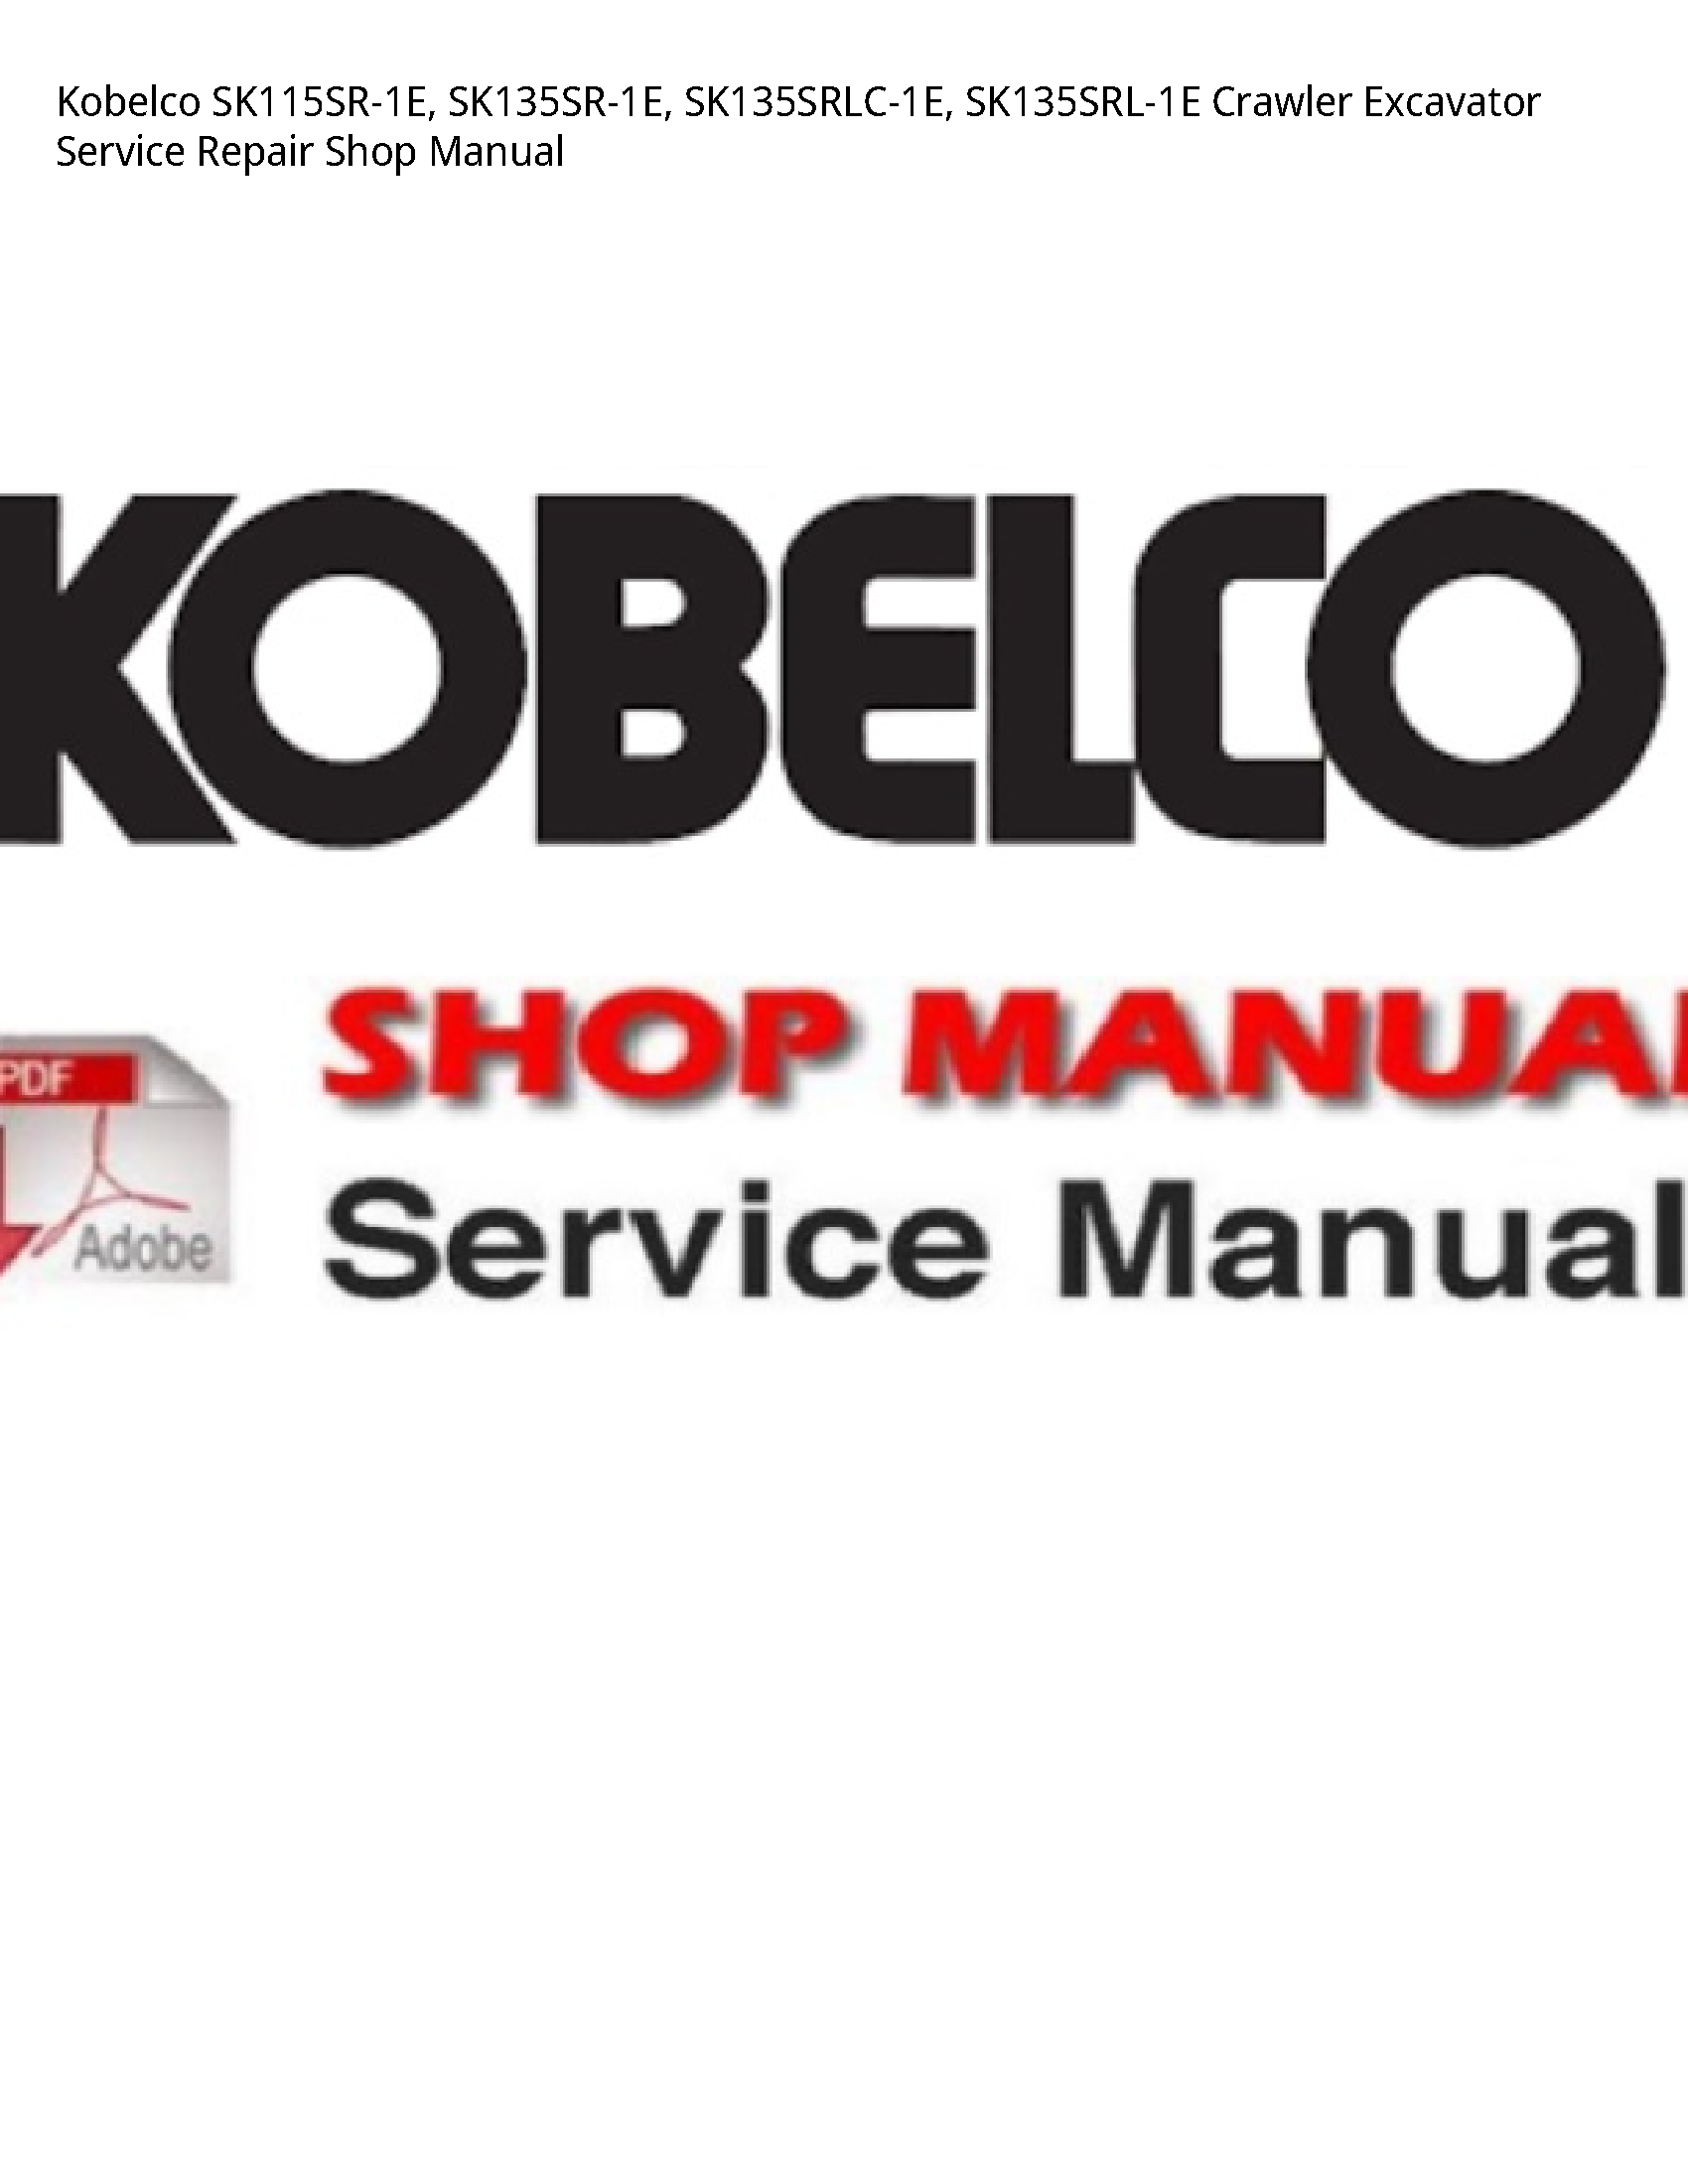 Kobelco SK115SR-1E Crawler Excavator manual